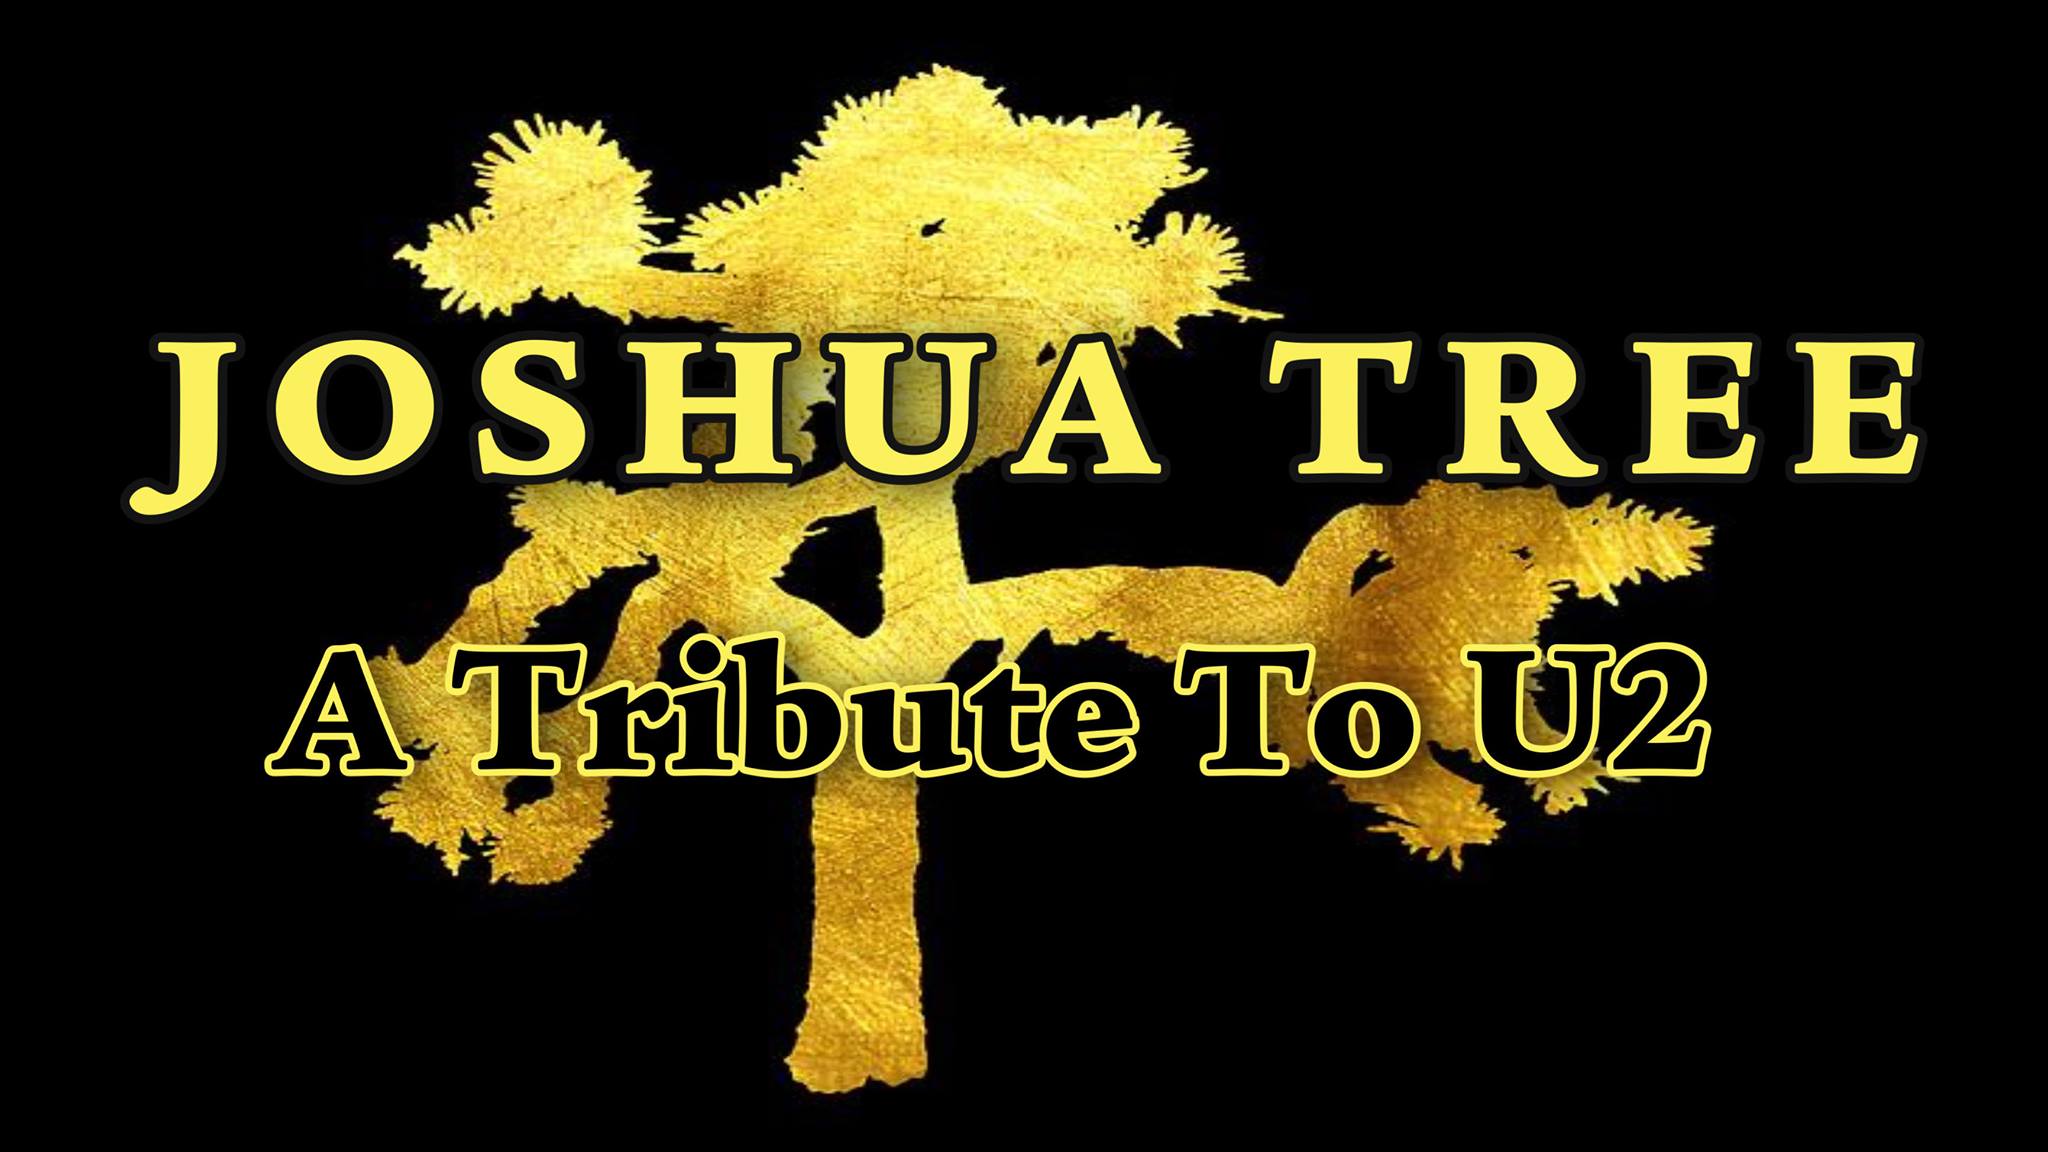 U2 Tribute: Joshua Tree - hero